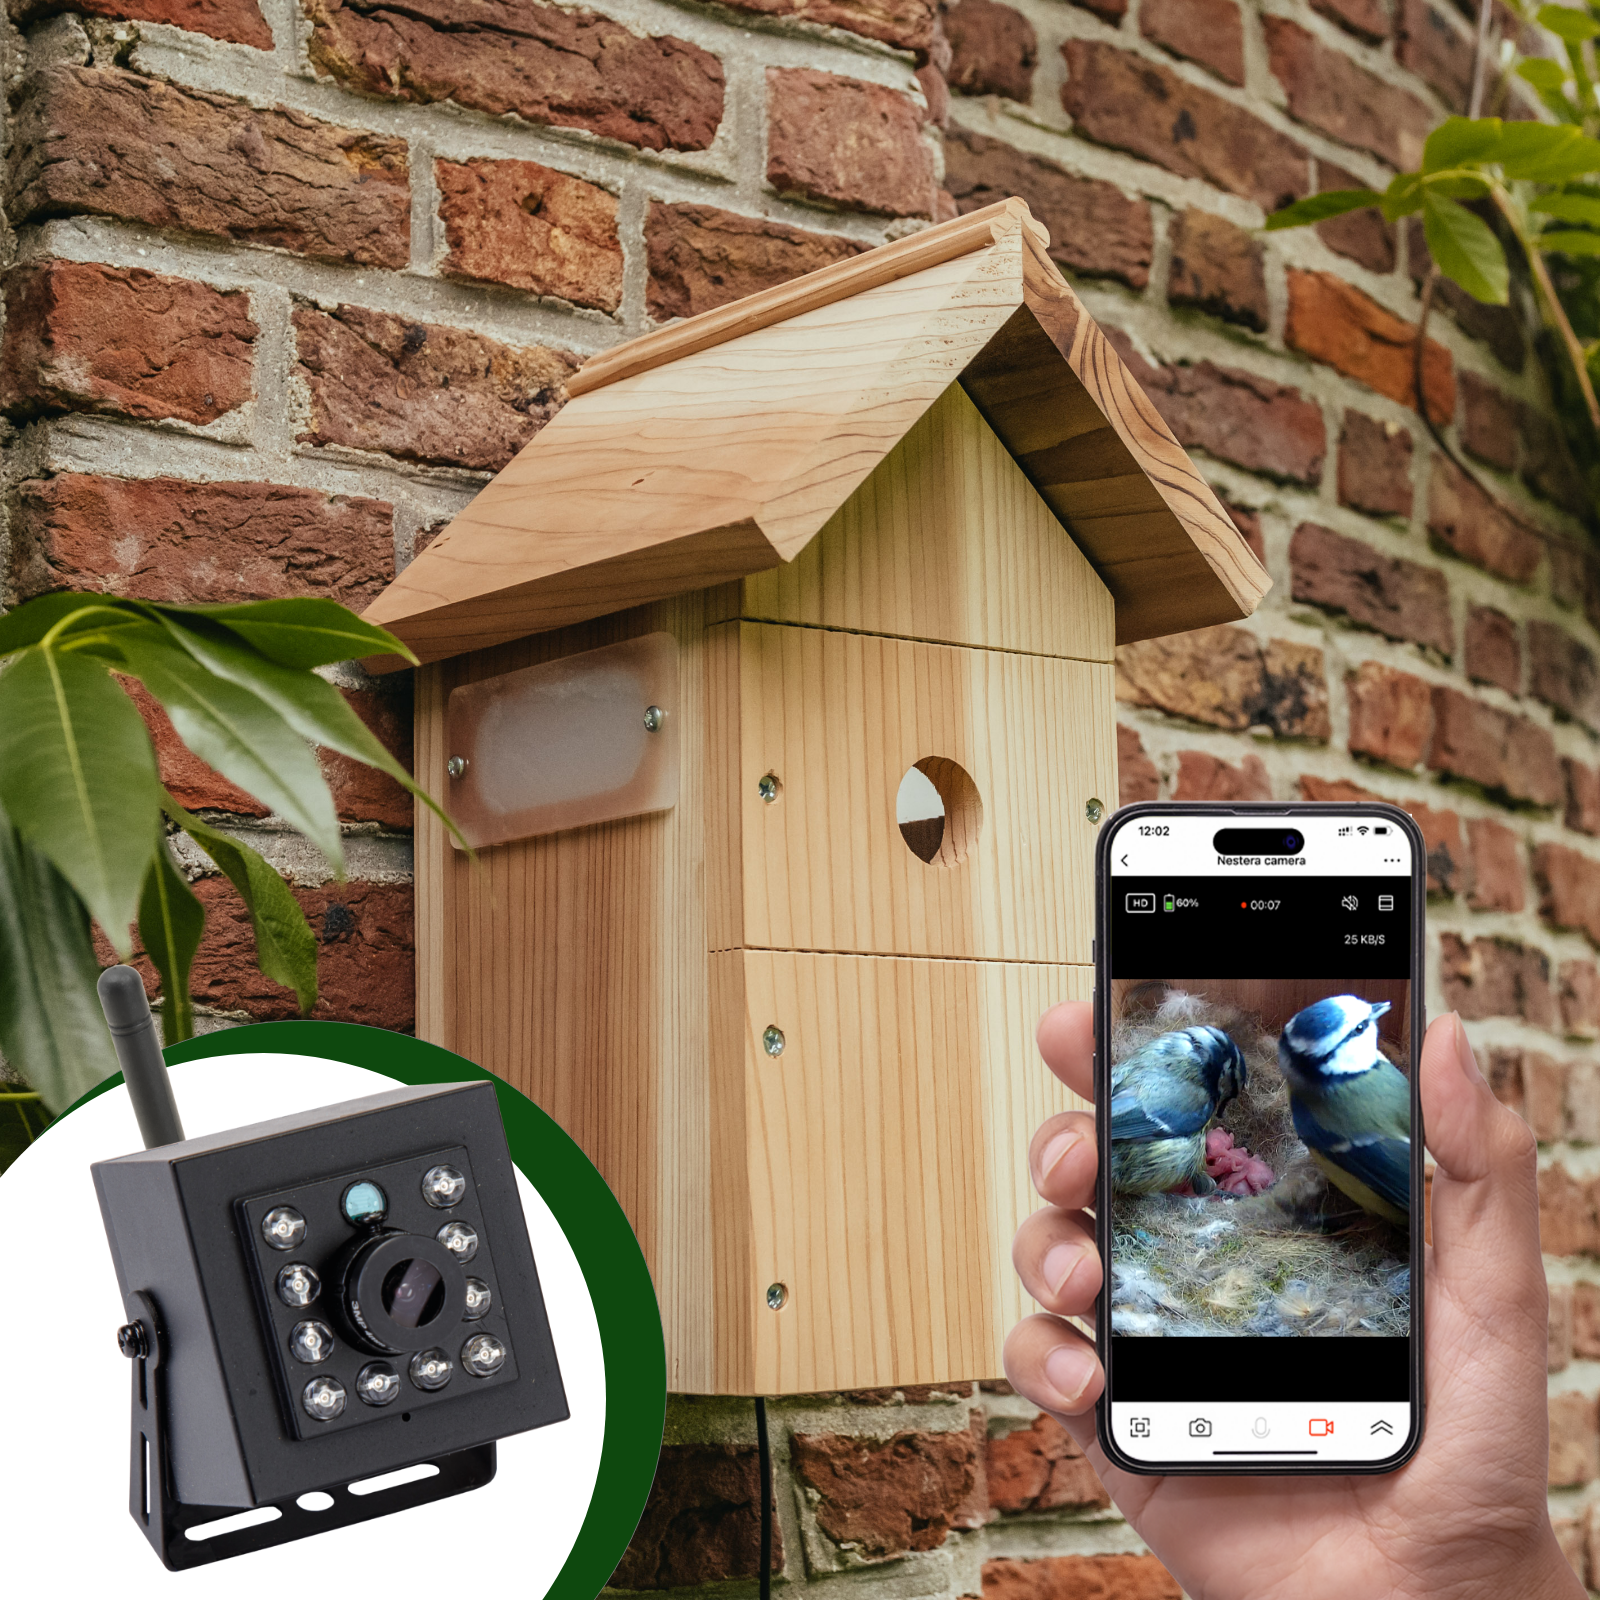 Nichoir à oiseaux avec caméra WiFi – Gardenature